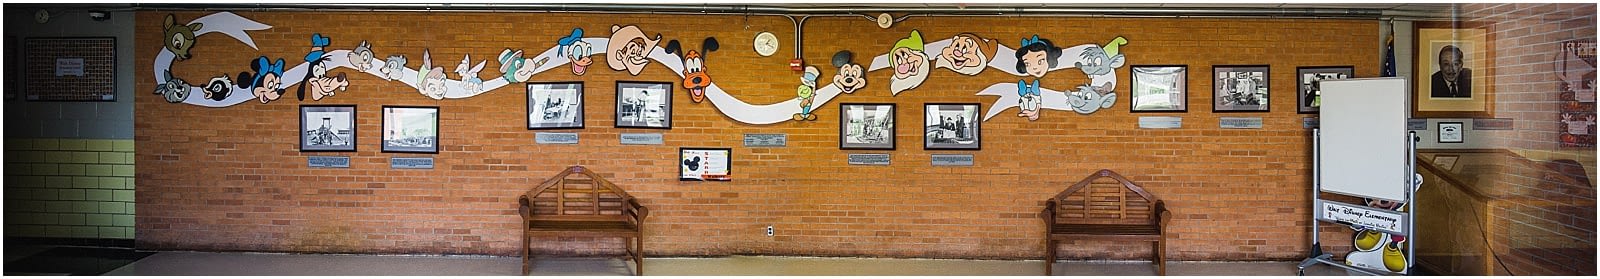 Walt-Disney-Elementary.jpg